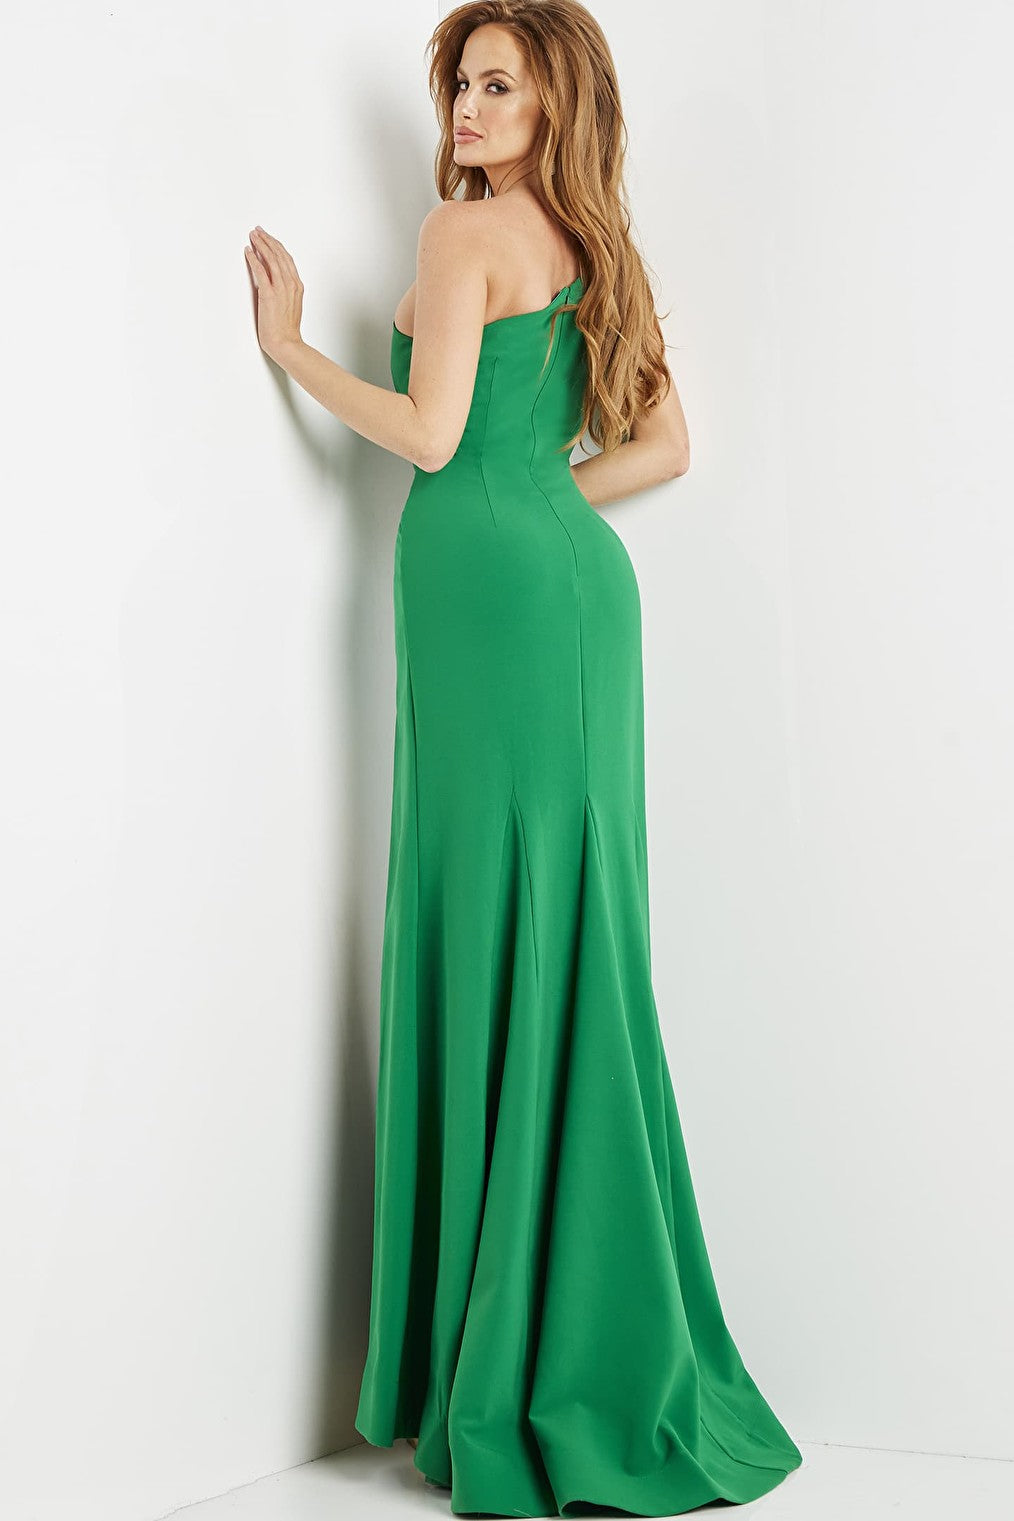 Emerald sheath evening dress 07279